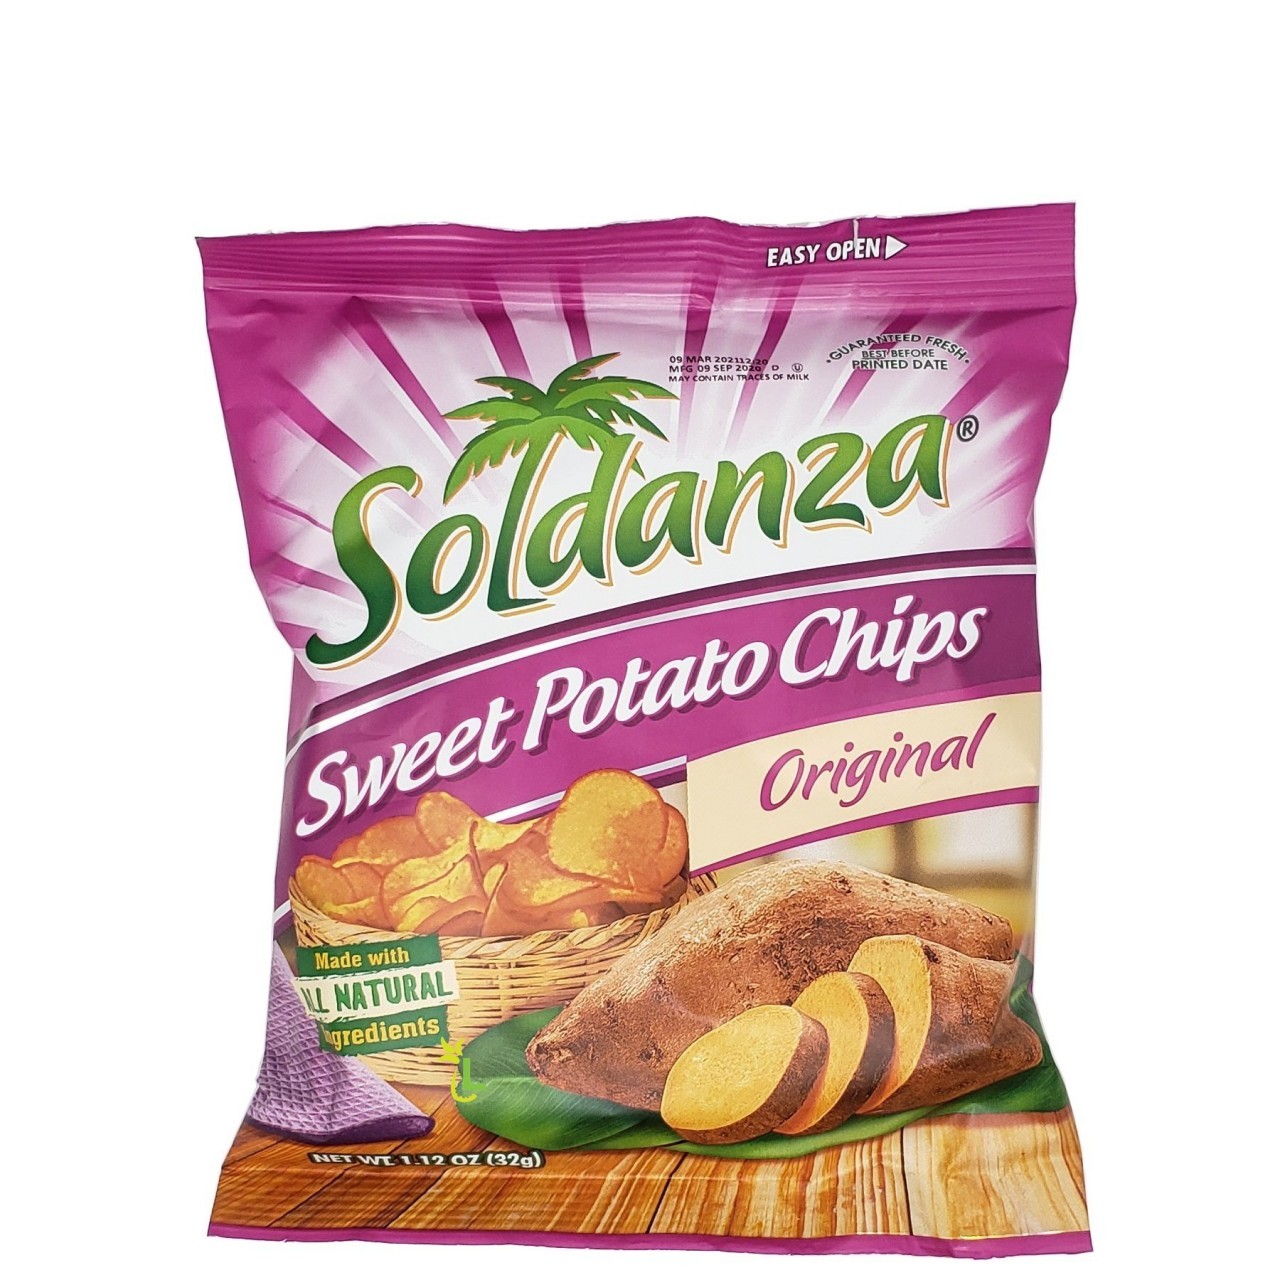 SOLDANZA SWEET POTATO CHIPS 32g